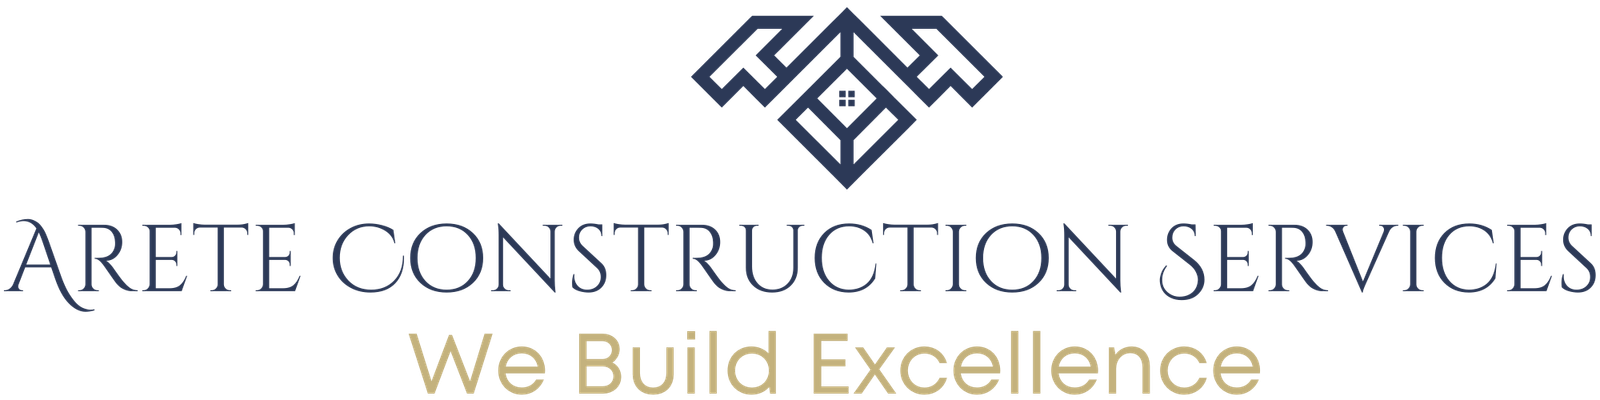 Arete Construction Services logo